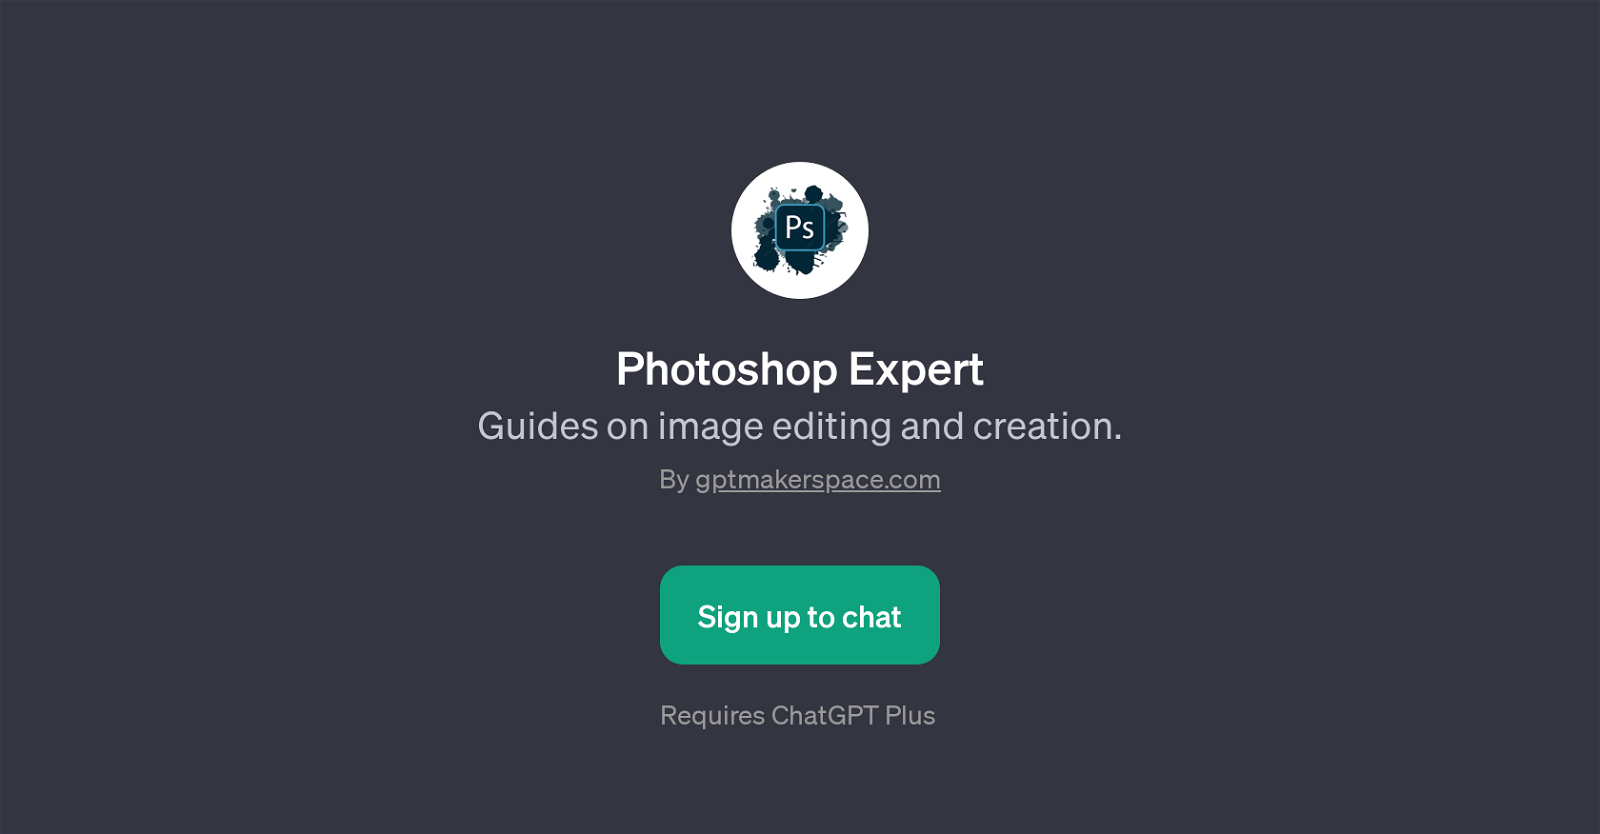 Photoshop Expert website